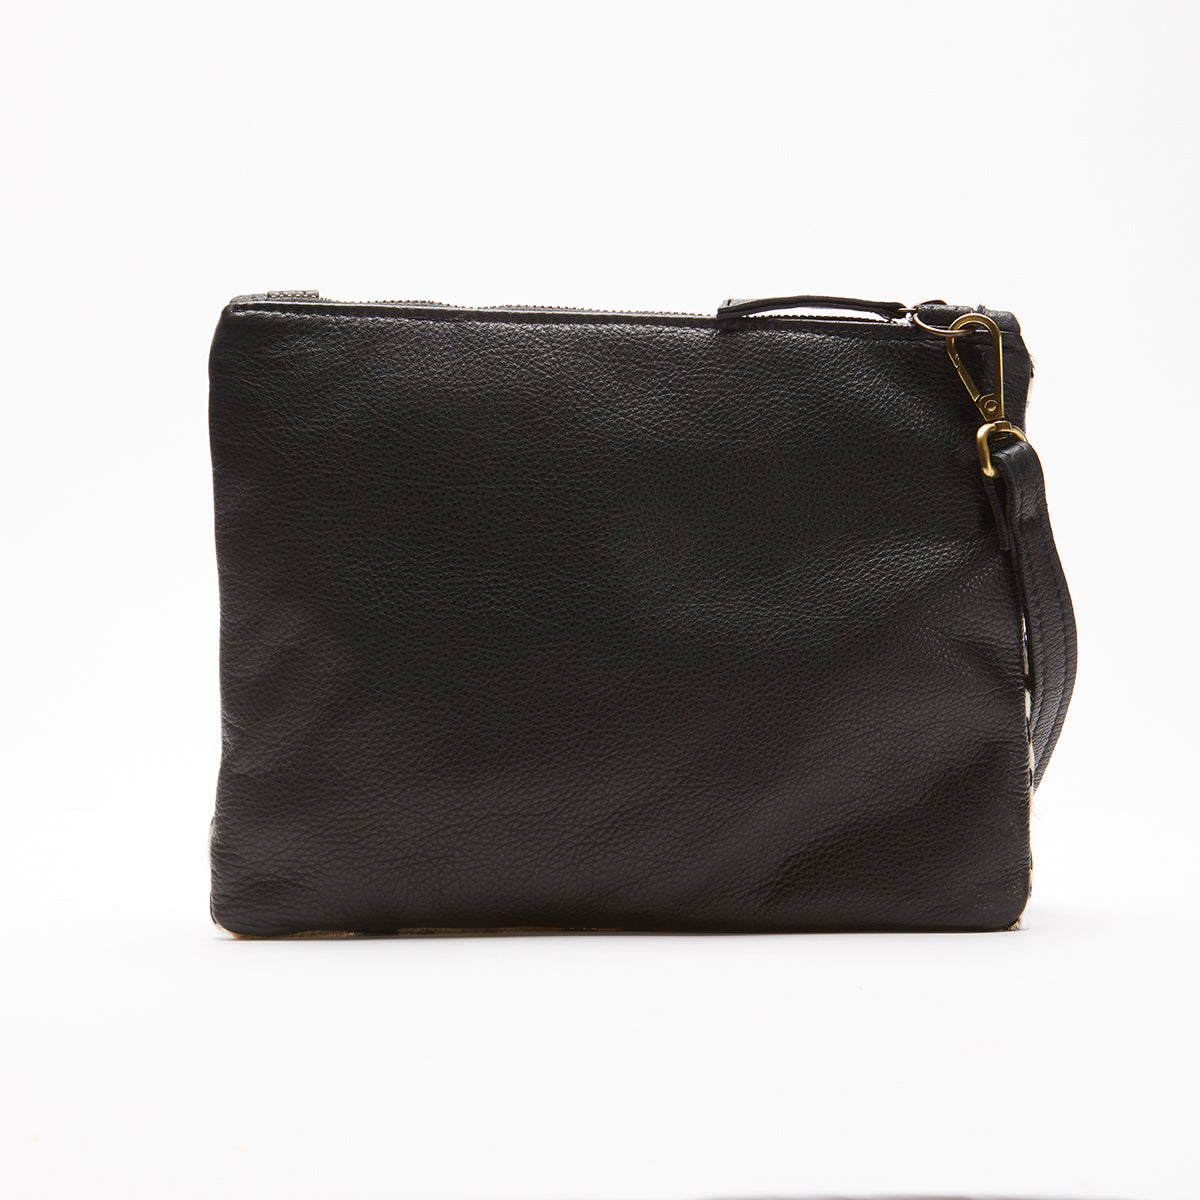 Wilson Leather Handbag Black & Animal Print